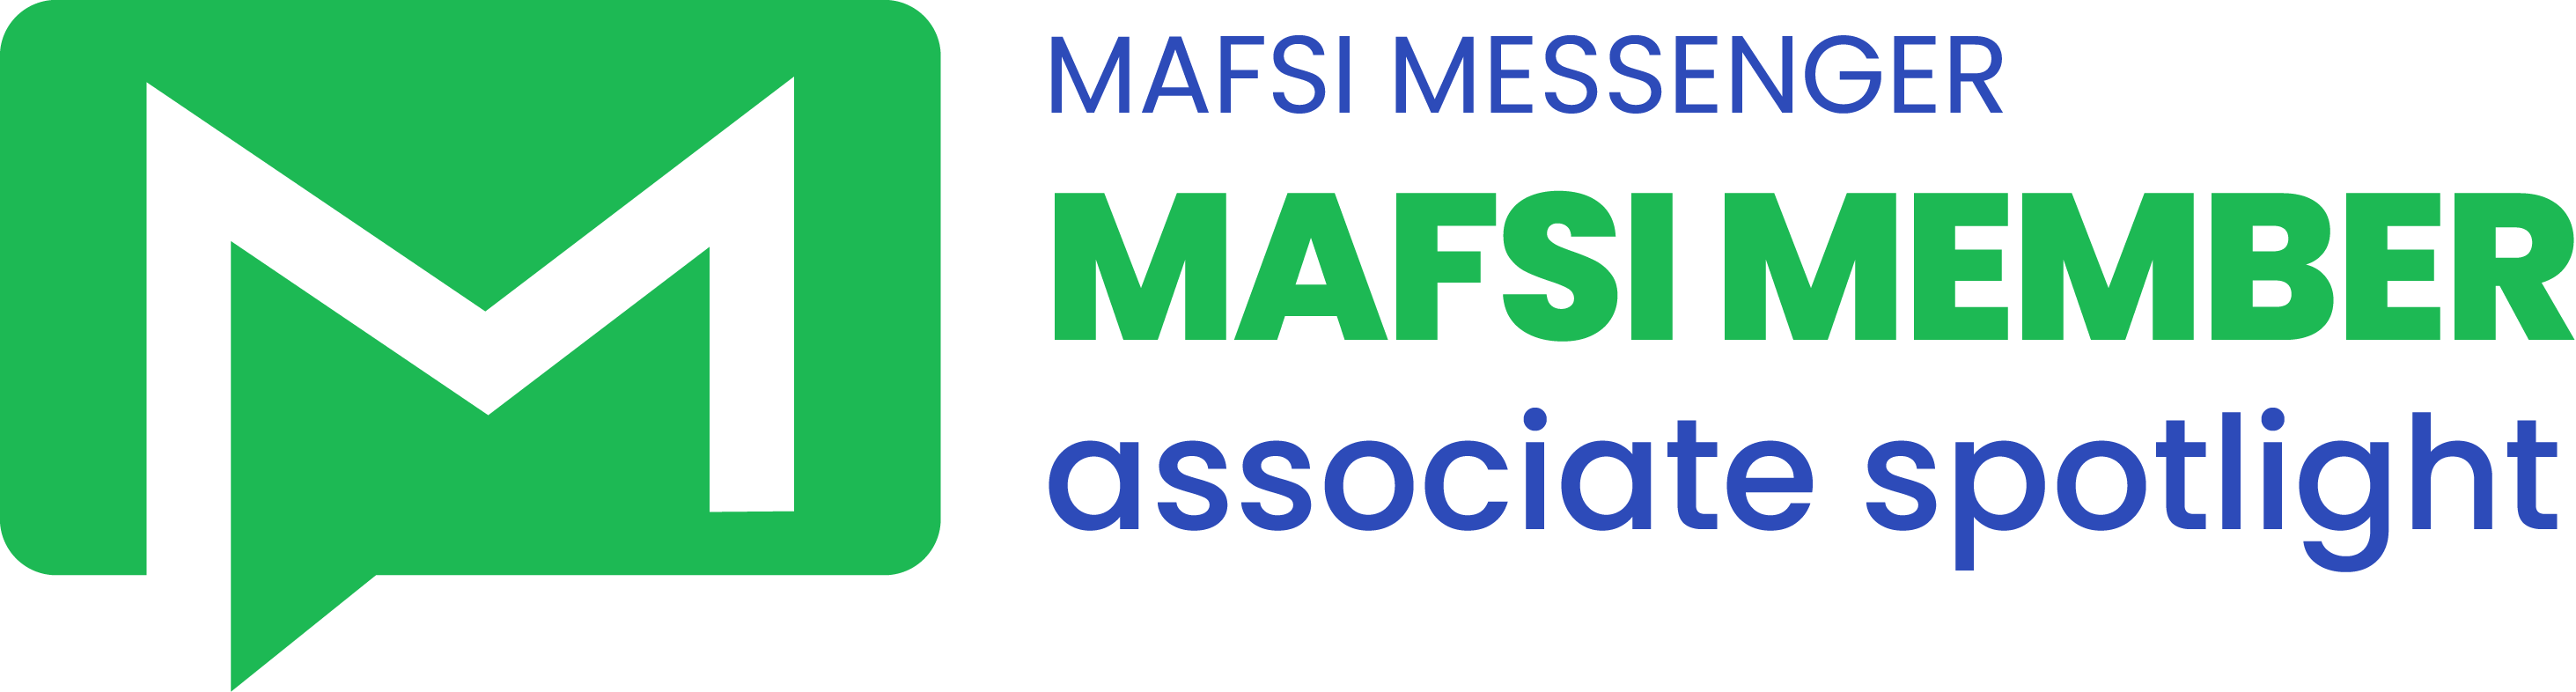 Mafsi Messenger Blog Banners v4 committee revised Tight to Artboards Outlines_MAFSI messenger Associate Member Spotlight